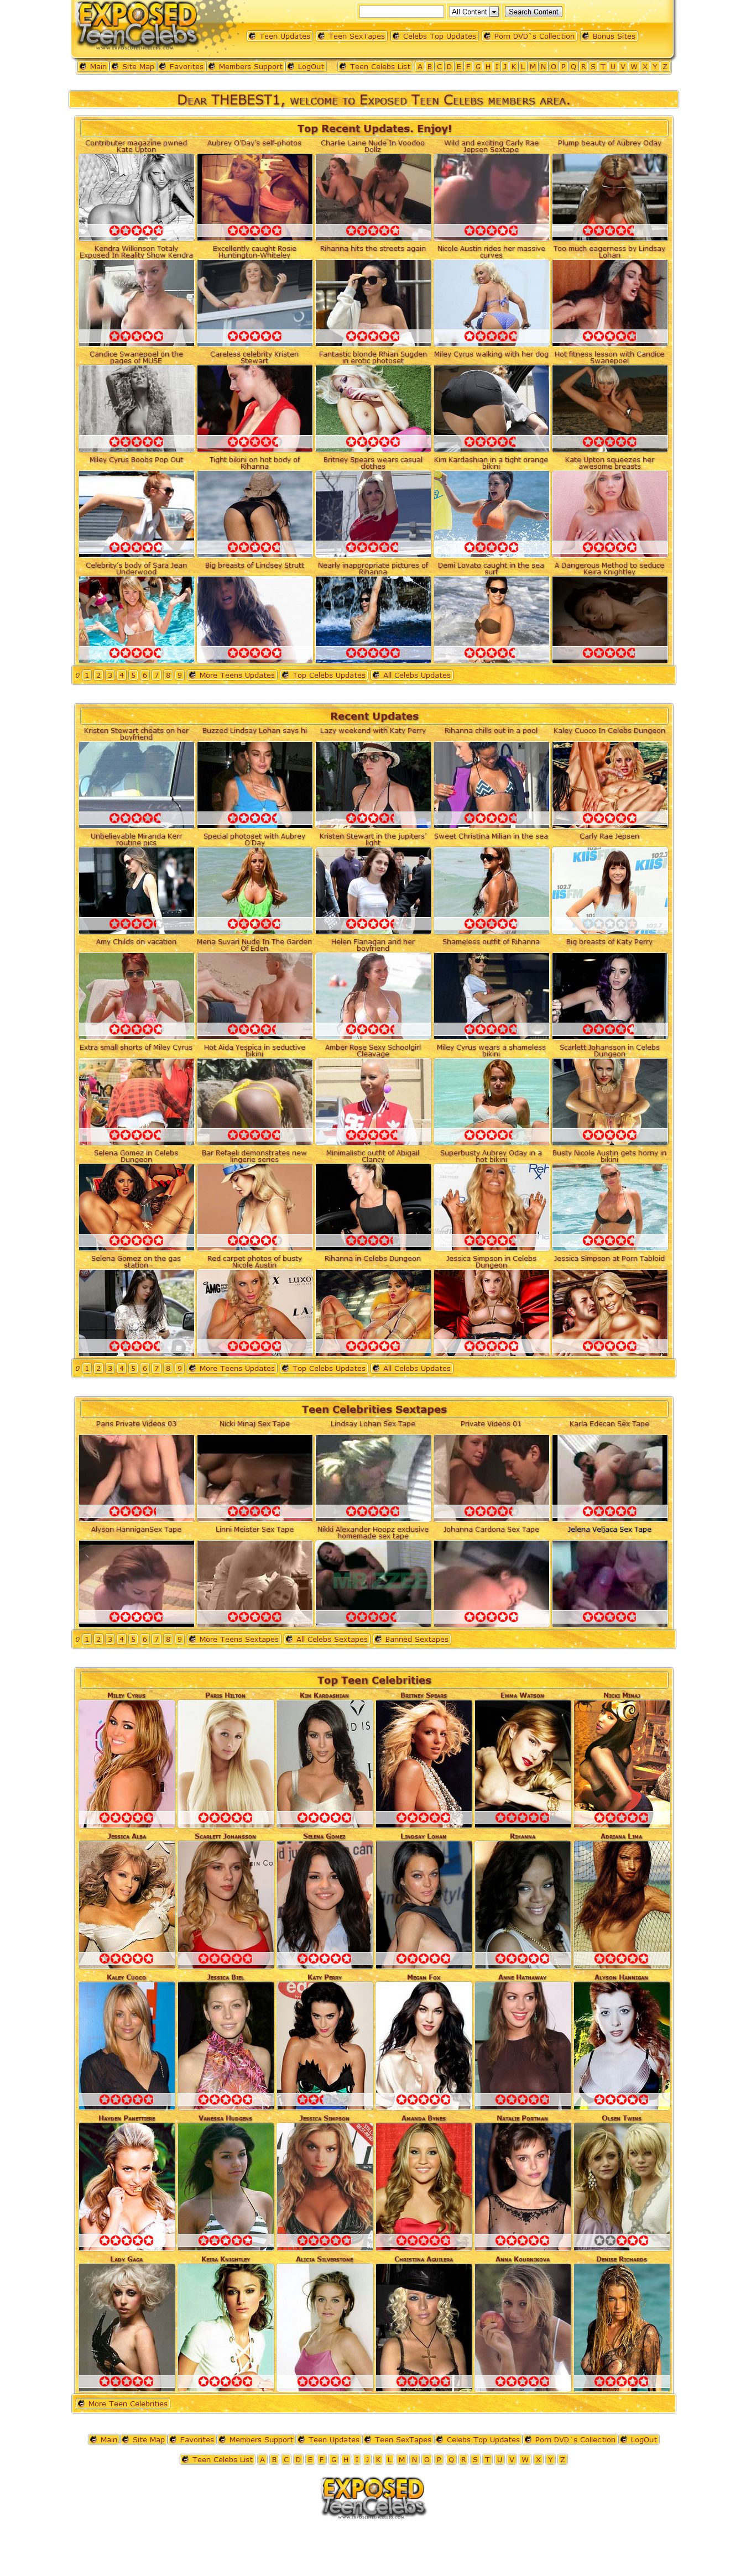 Free Celeb Porn Video Sites 104